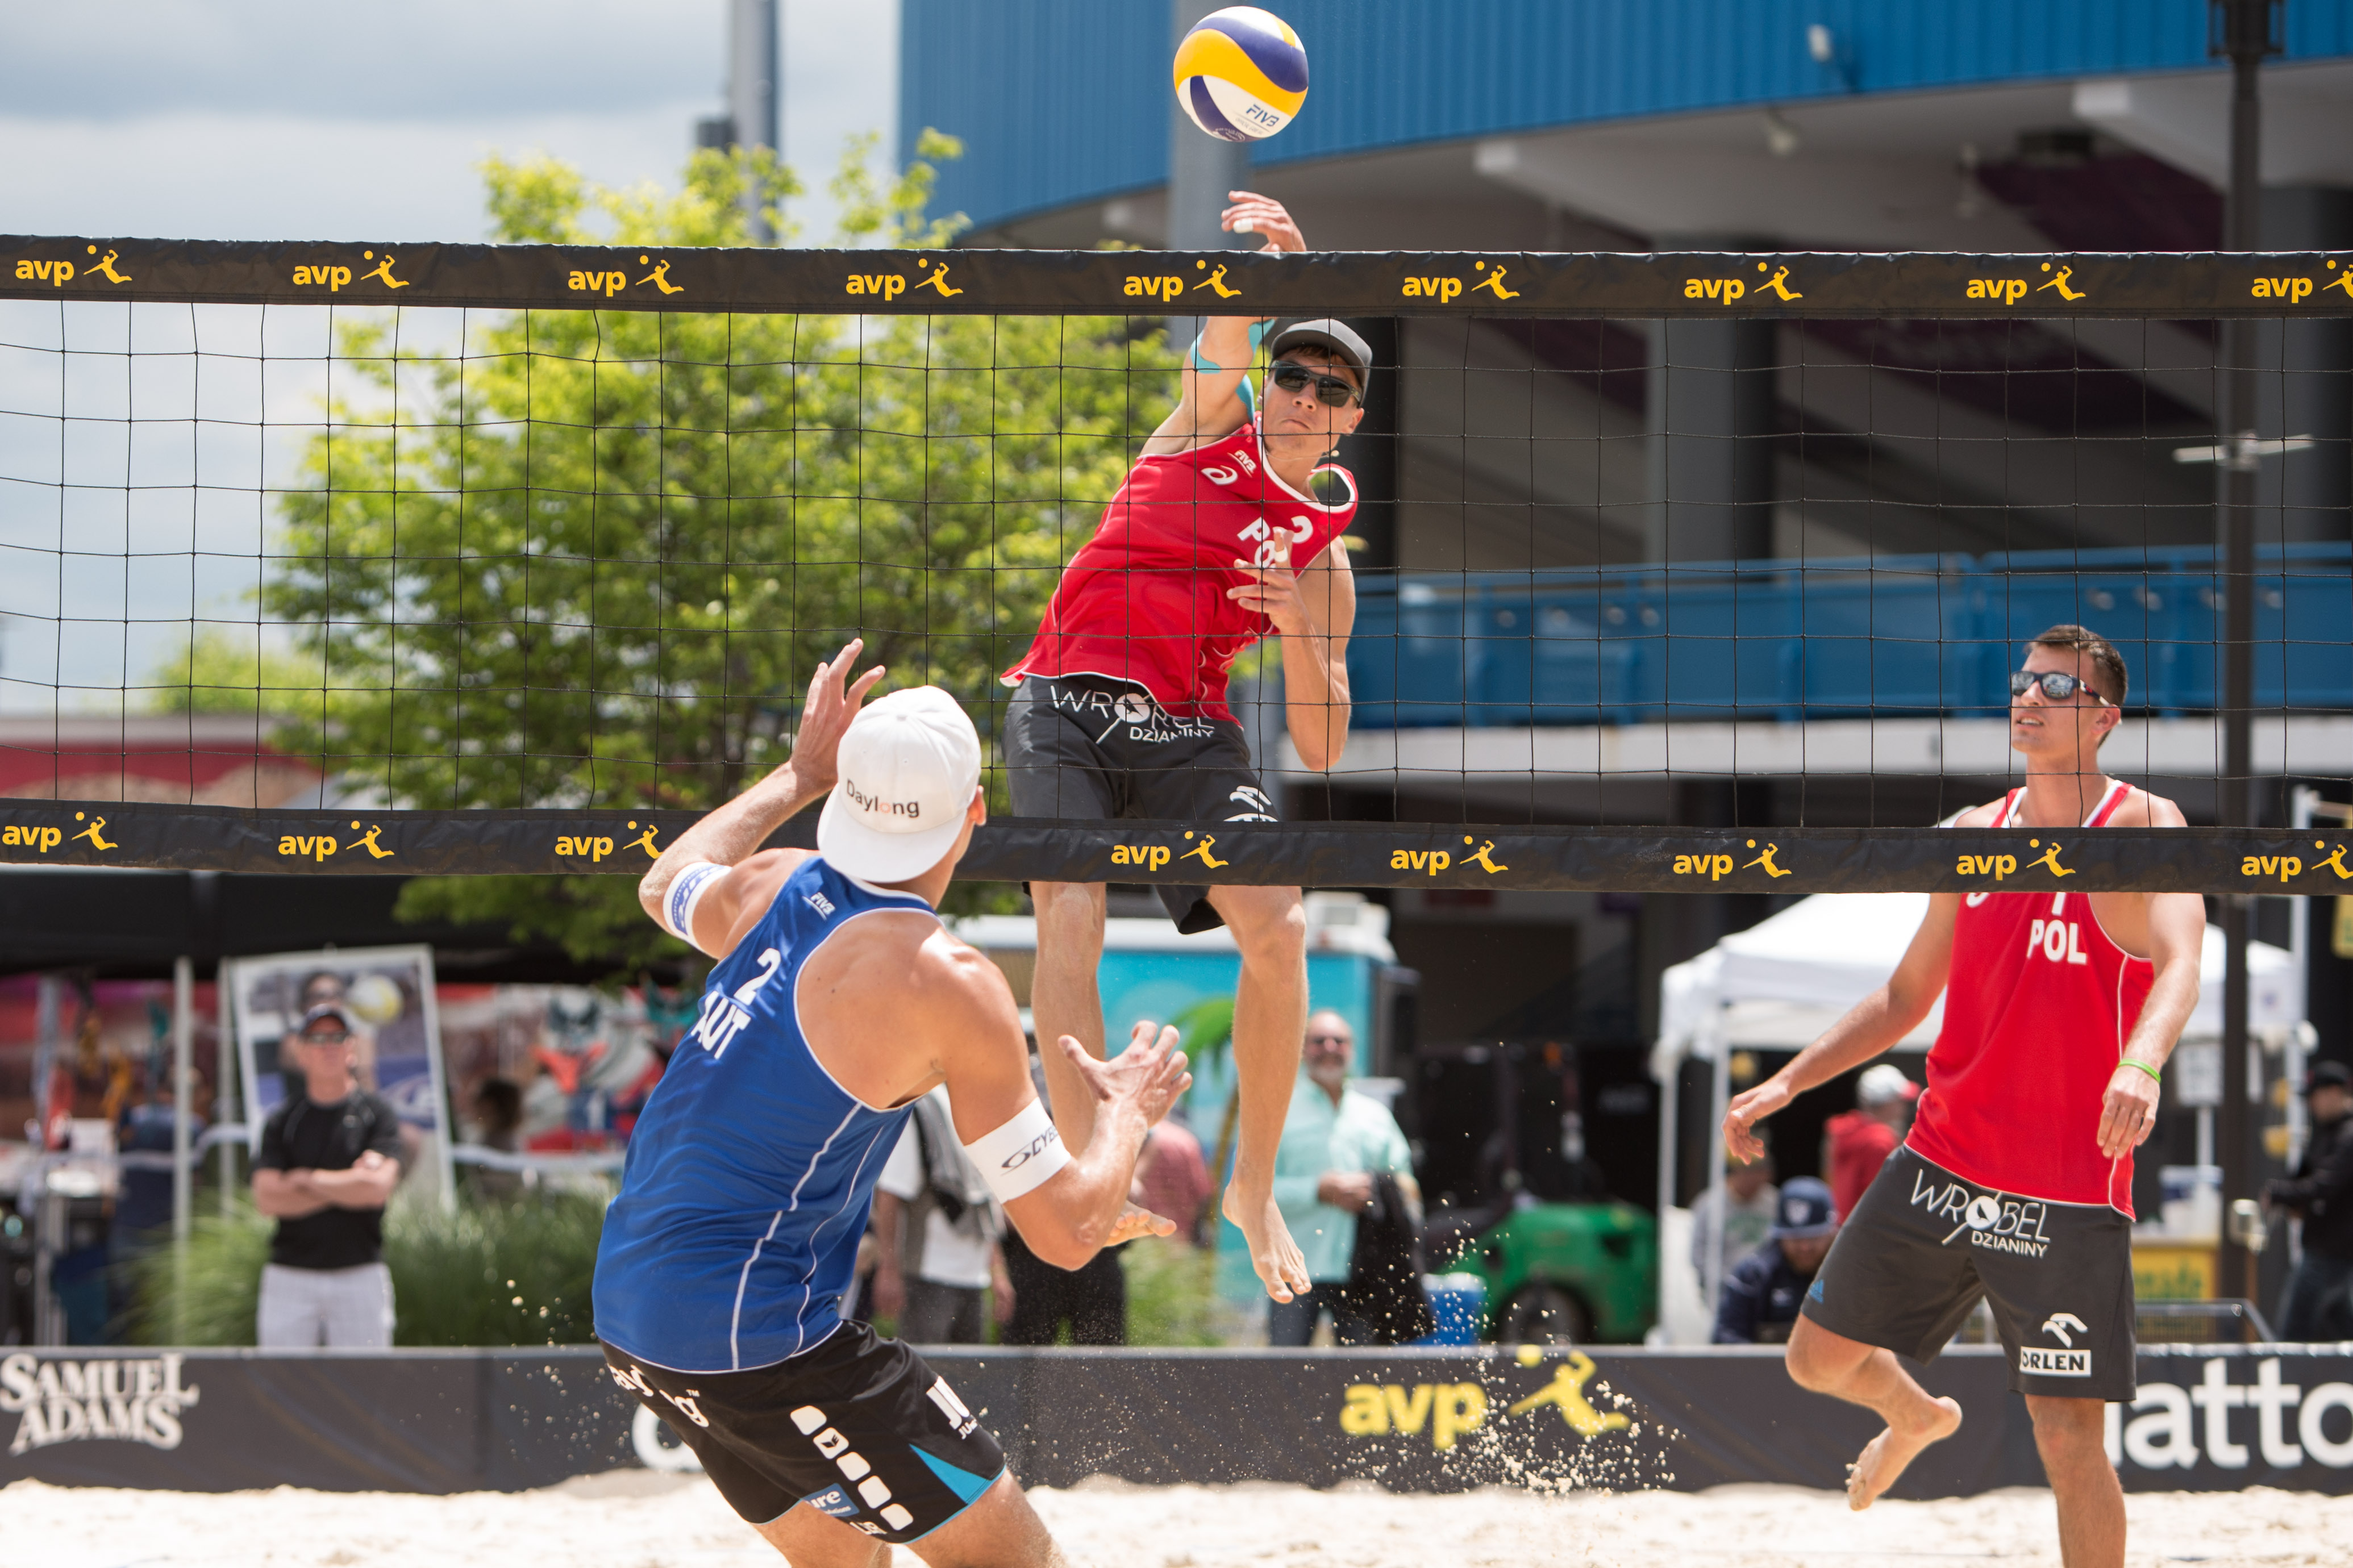 Cincinnati 2016 Photo Gallery - AVP Beach Volleyball